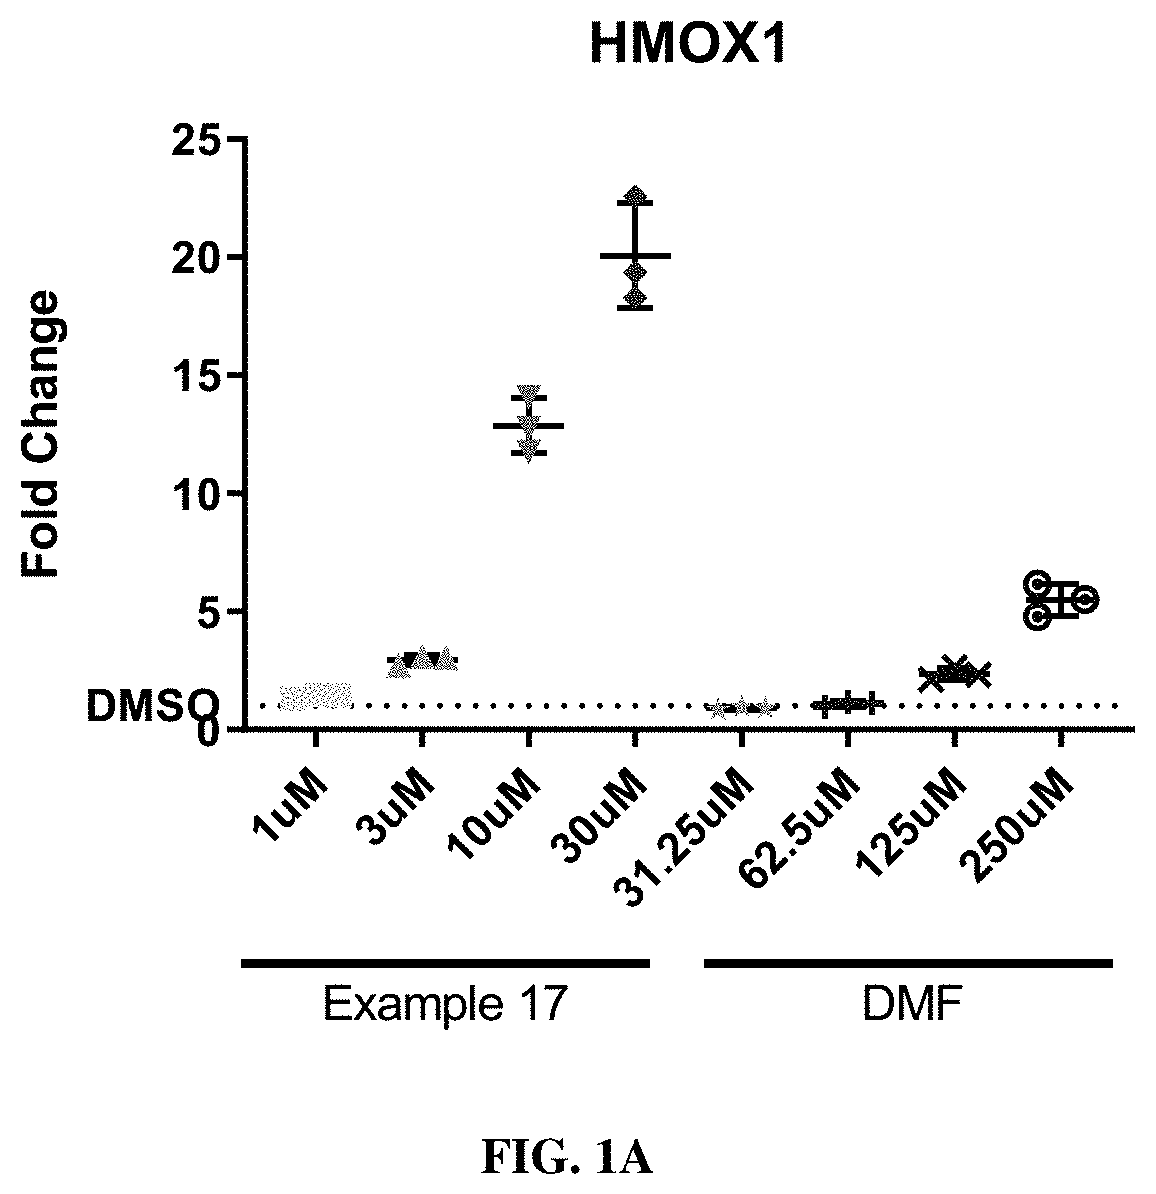 HMOX1 inducers